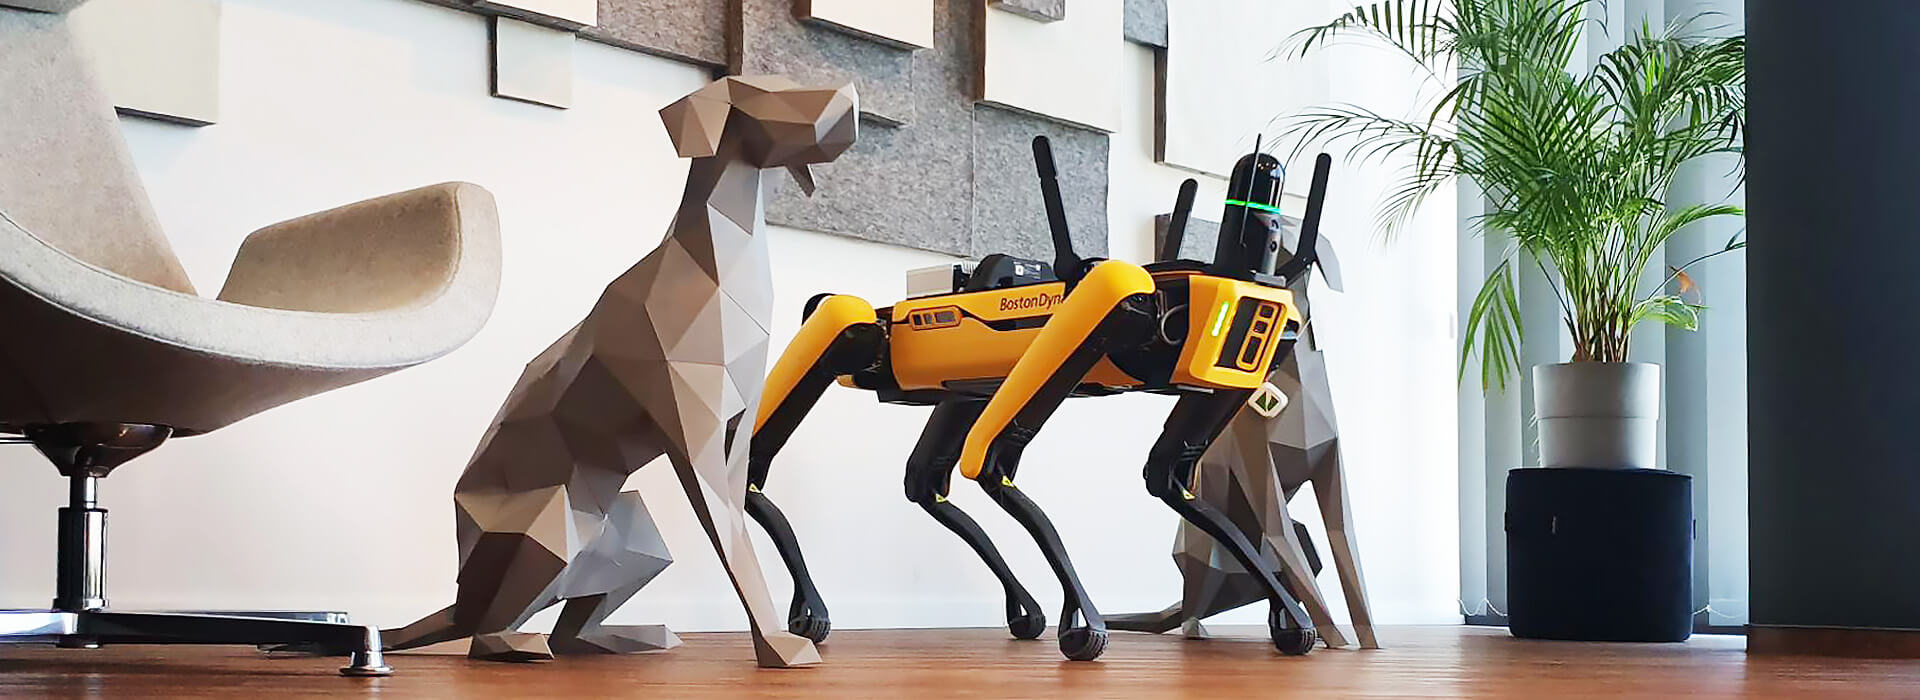 Spot, Boston Dynamics' robot dog, scans BuildEXT's Budapest office